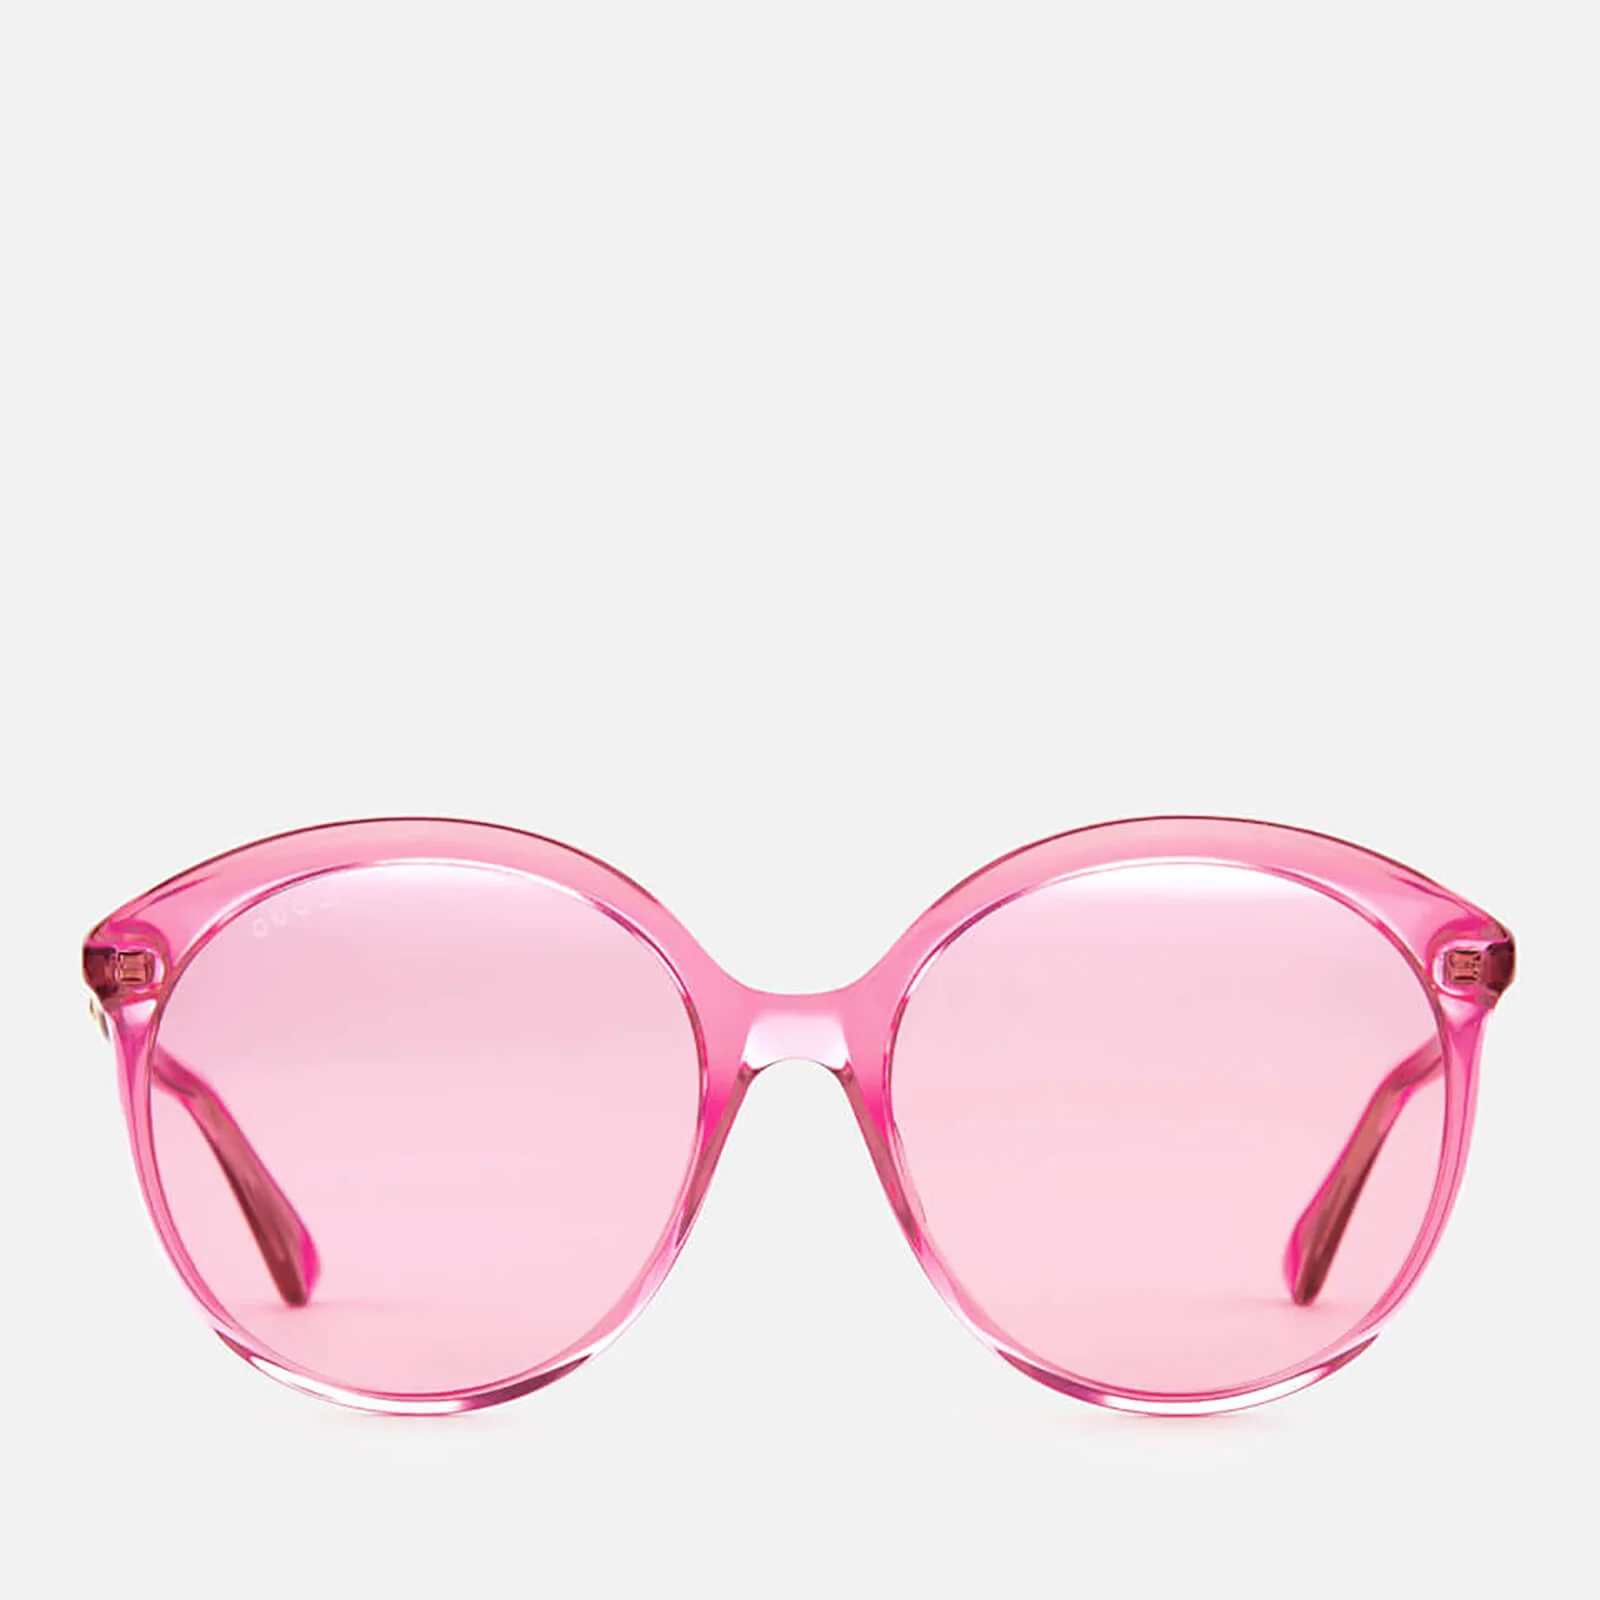 Gucci Women's Polarised Round Frame Sunglasses - Fuchsia Image 1